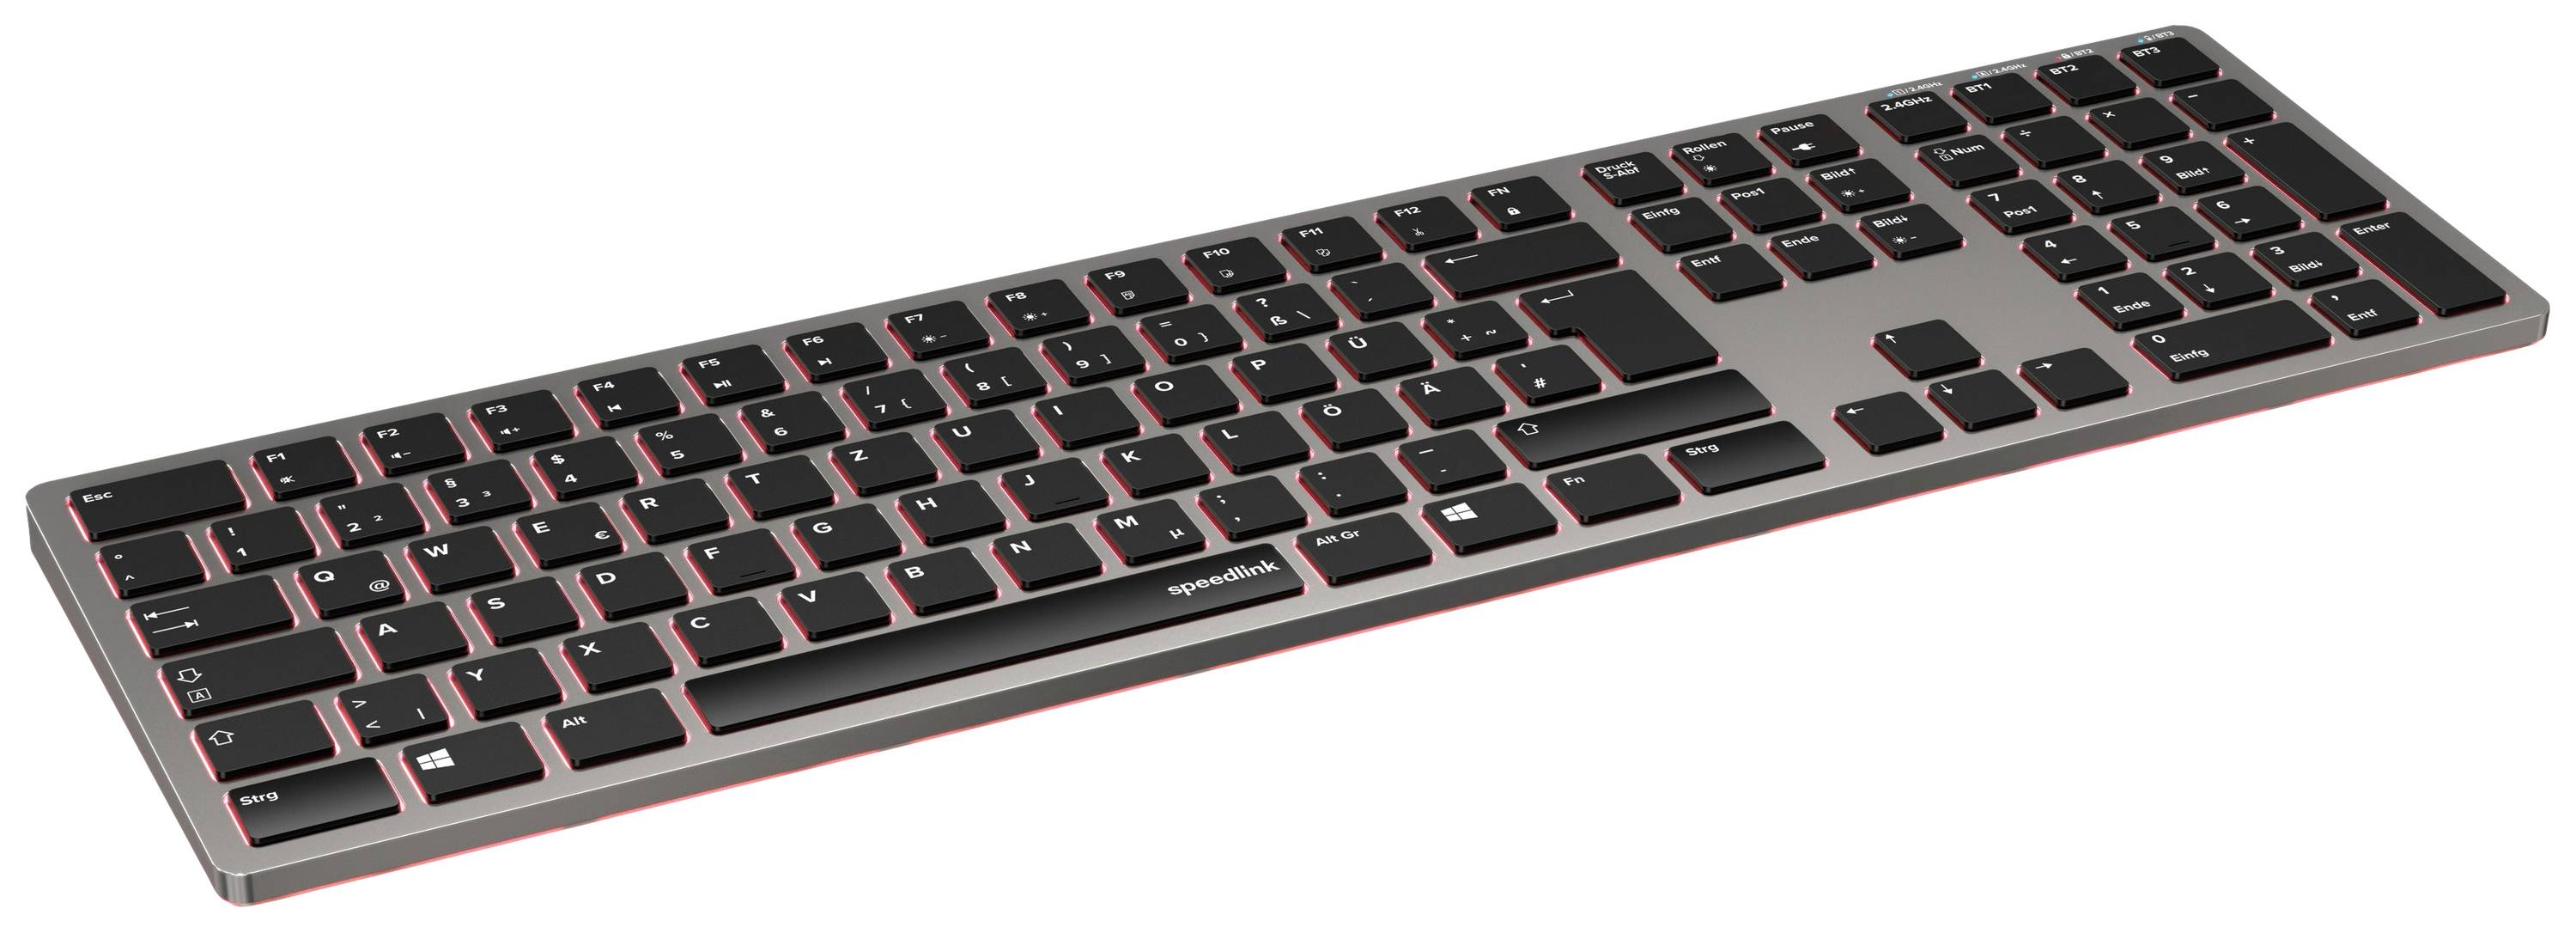 SPEED-LINK Tastatur LEVIA Illuminated Rechargeable, Bluetooth retail